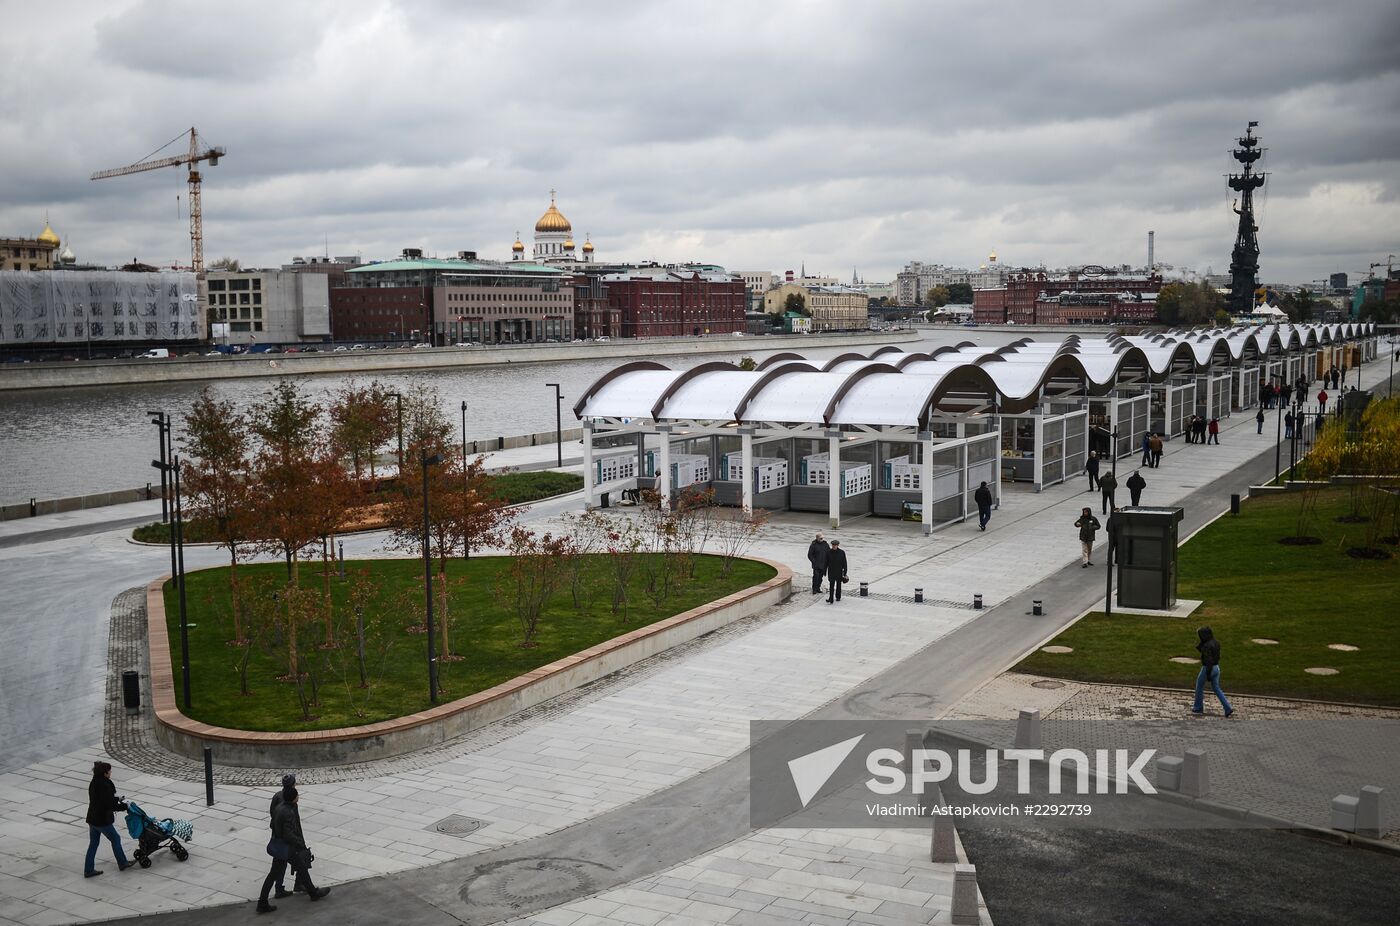 Krymskaya Embankment remodeling to be completed